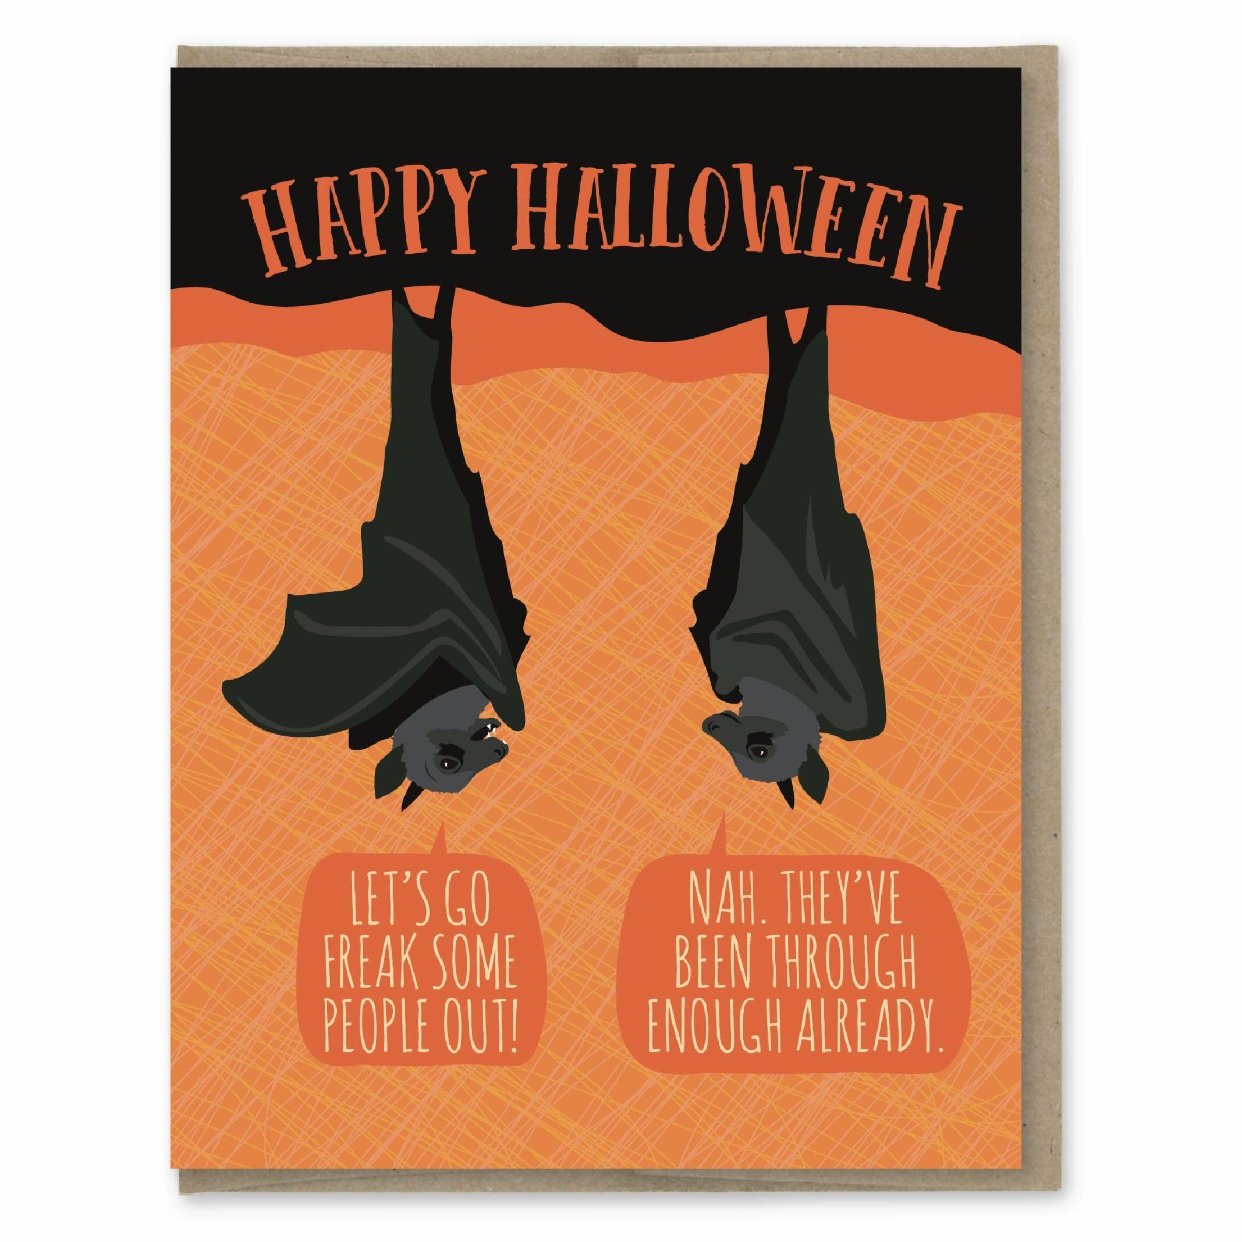 Happy Halloween greeting card